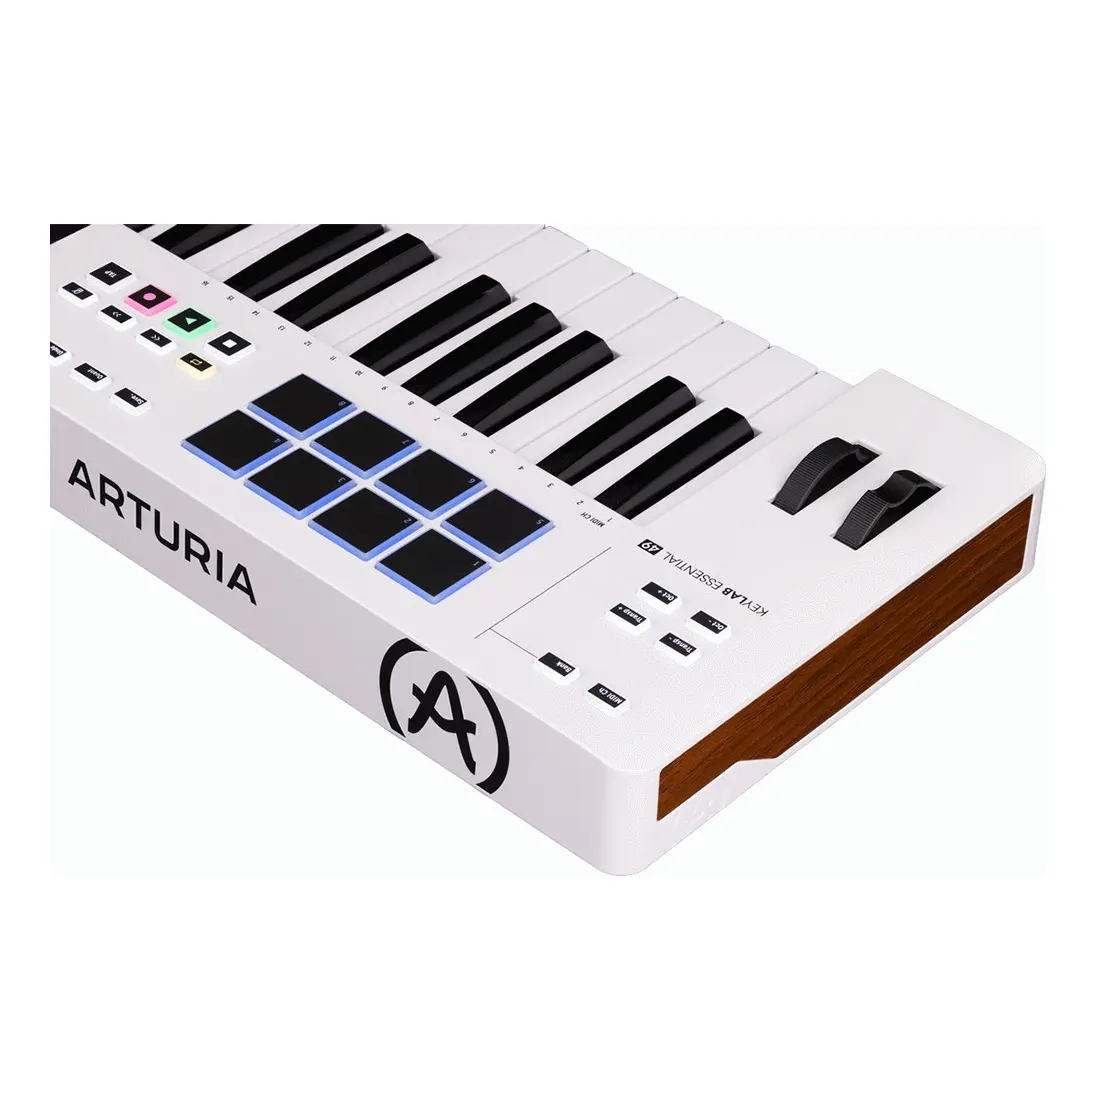 Arturia Keylab Essential 49 MK3 MIDI klaviatura